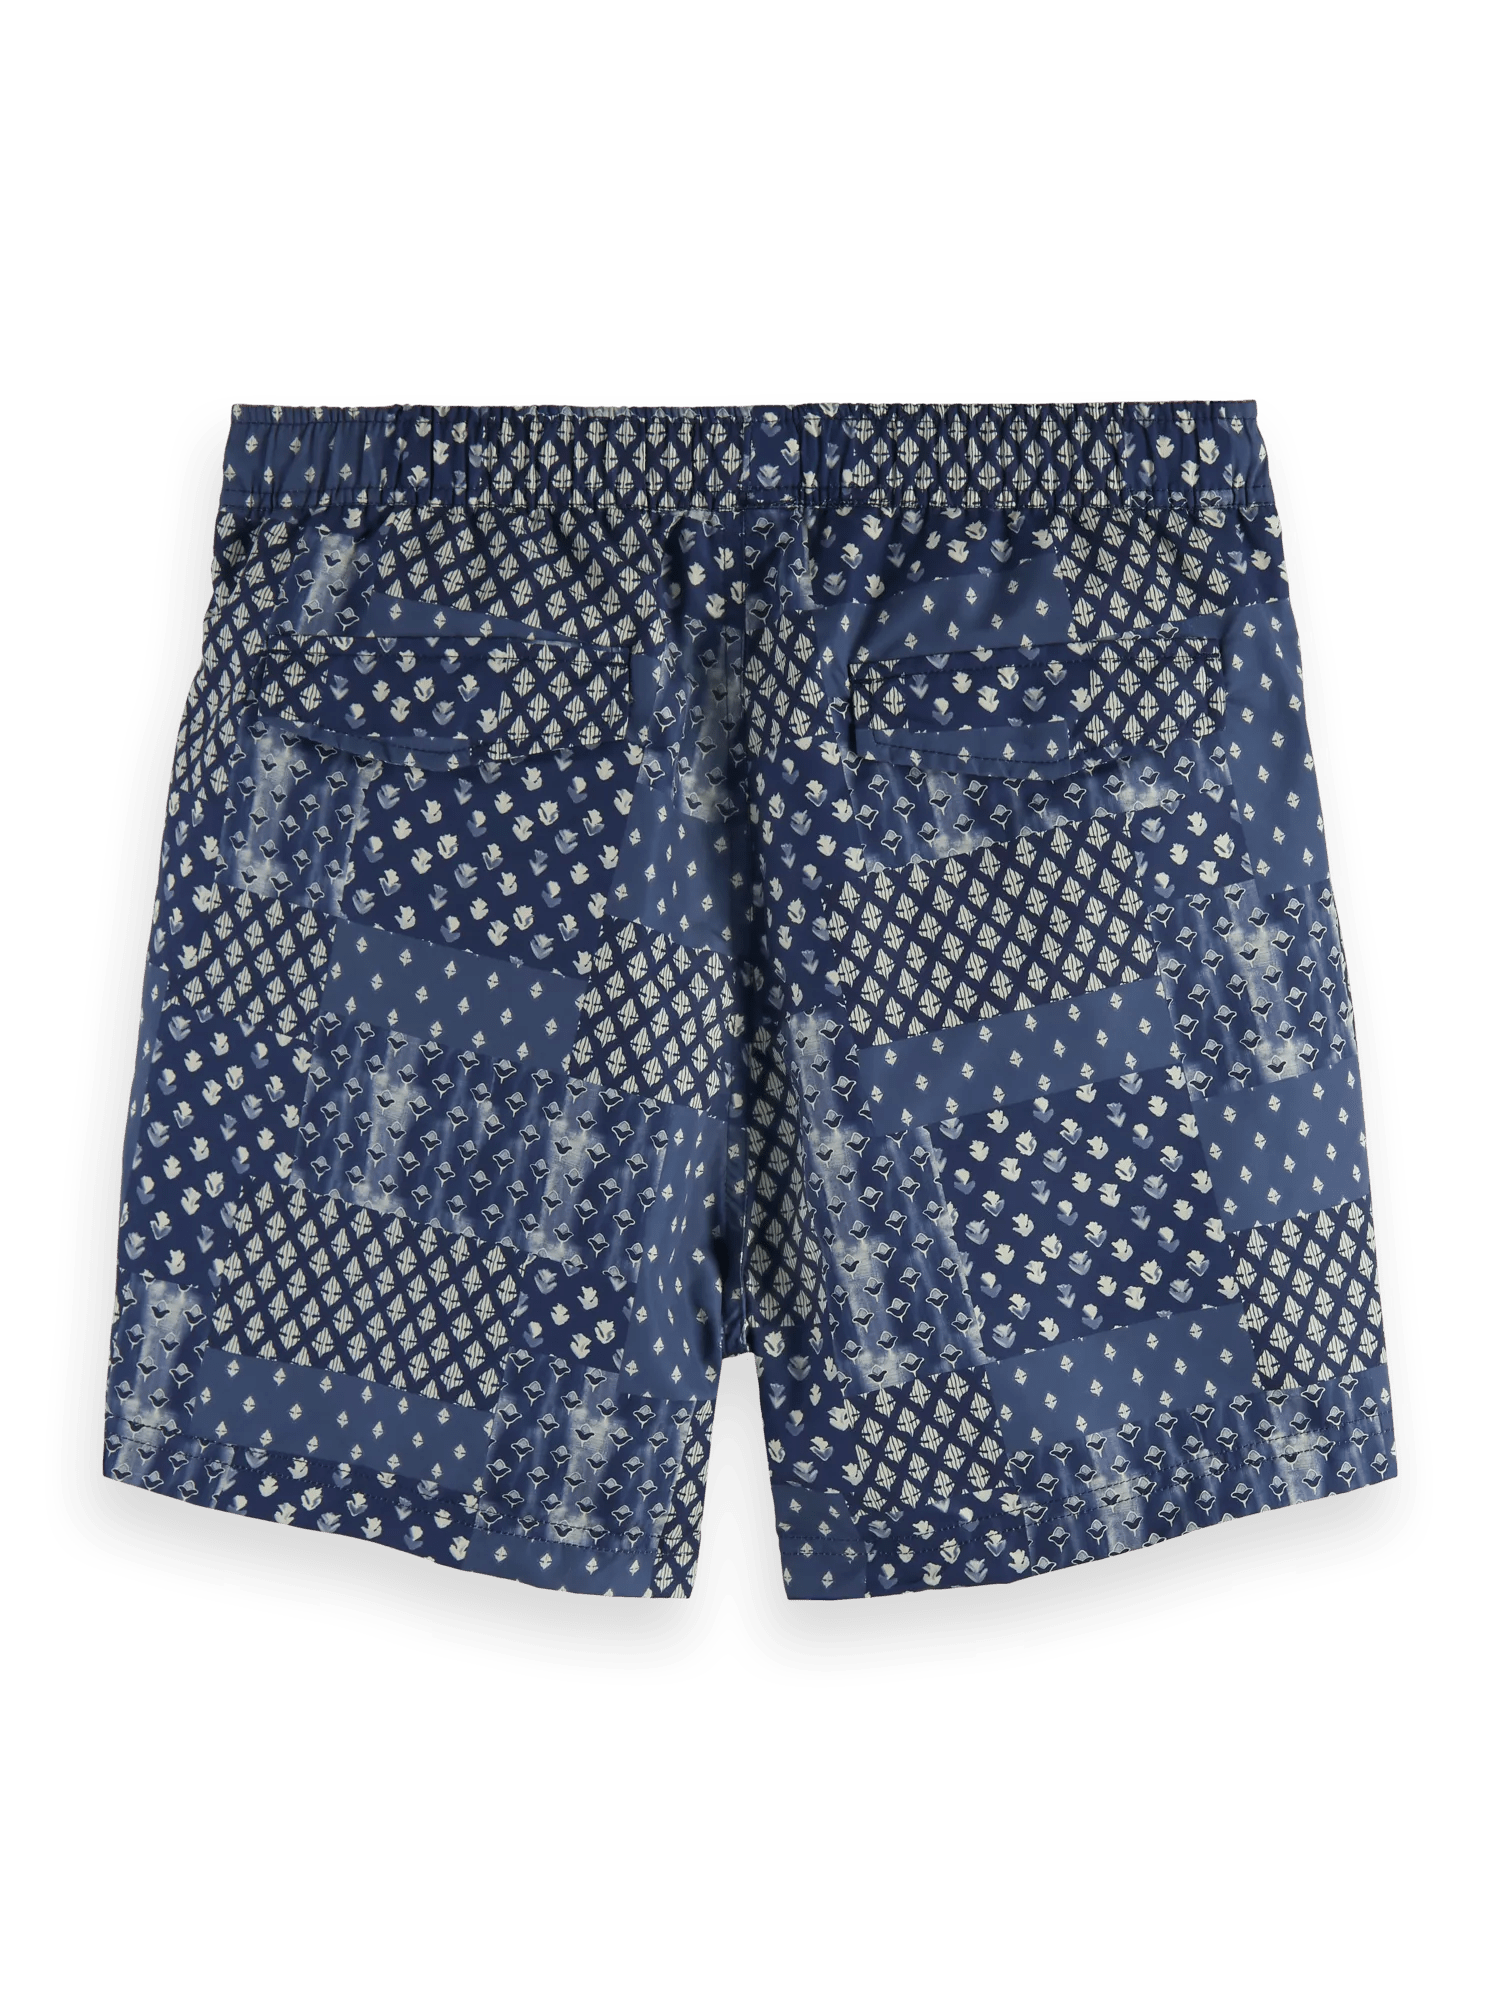 Scotch & Soda Short-Length printed swim shorts BCK